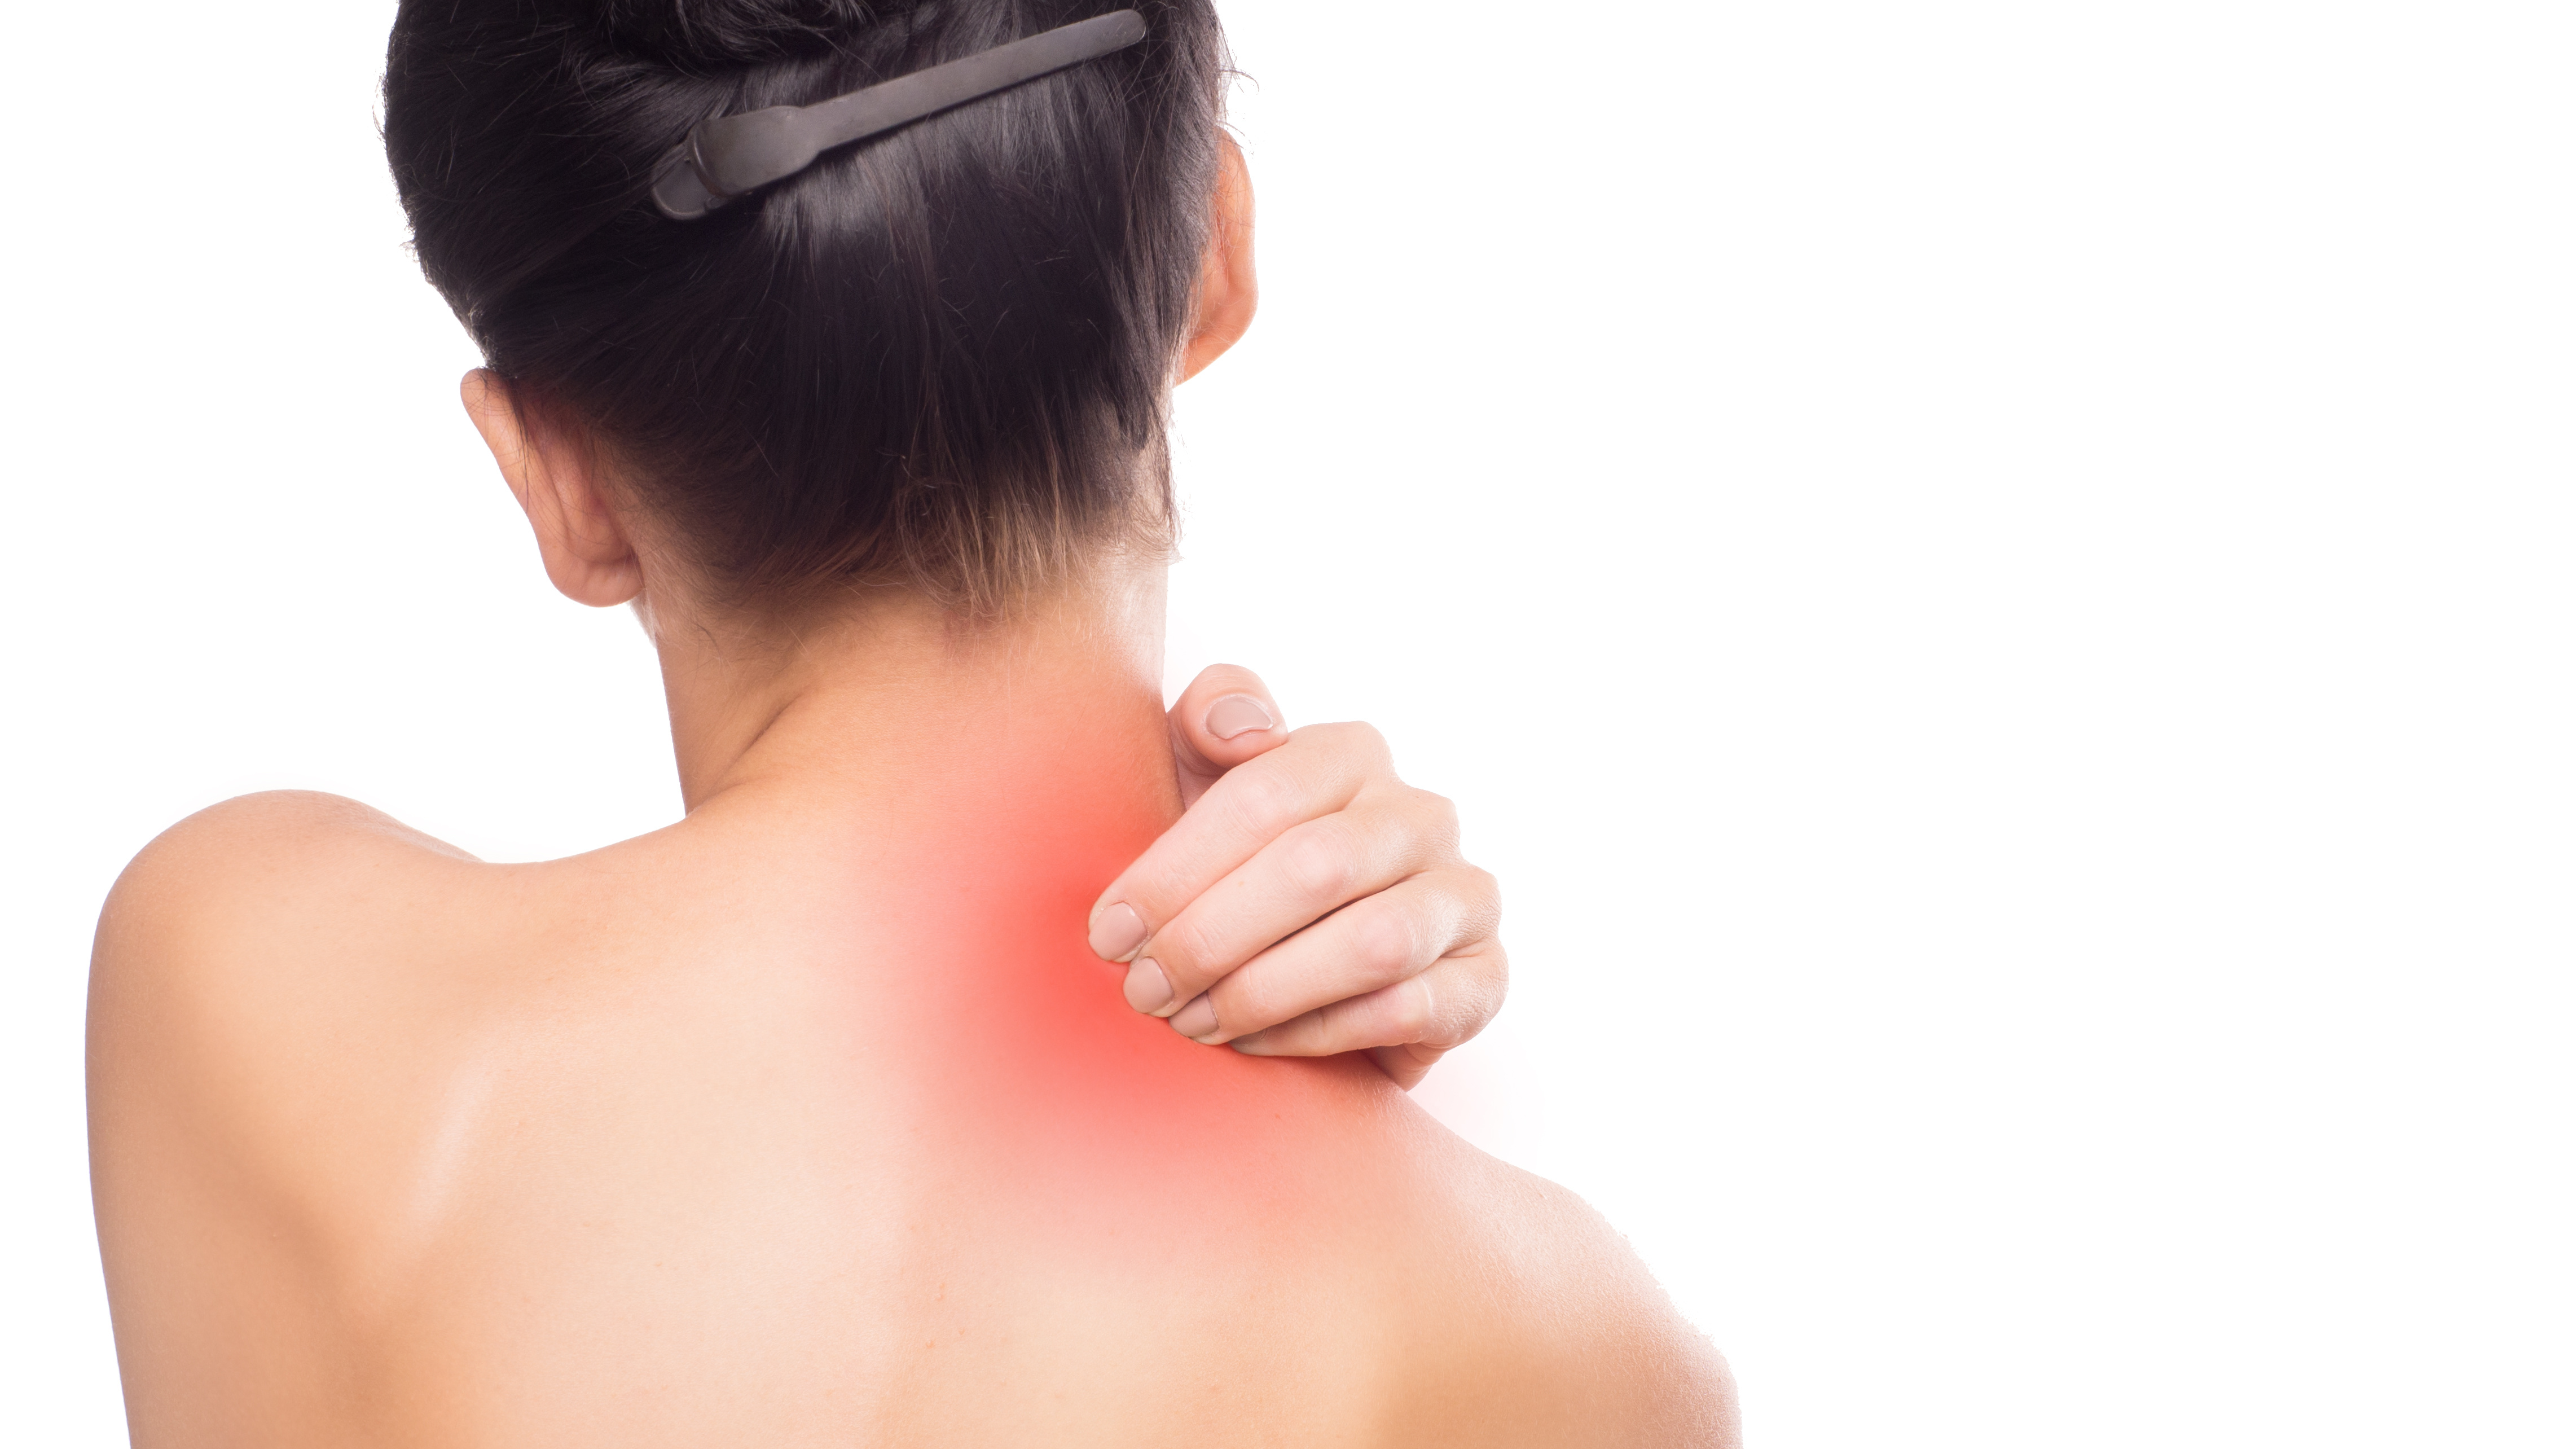 Pain. Woman touchig her neck. Massaging neck